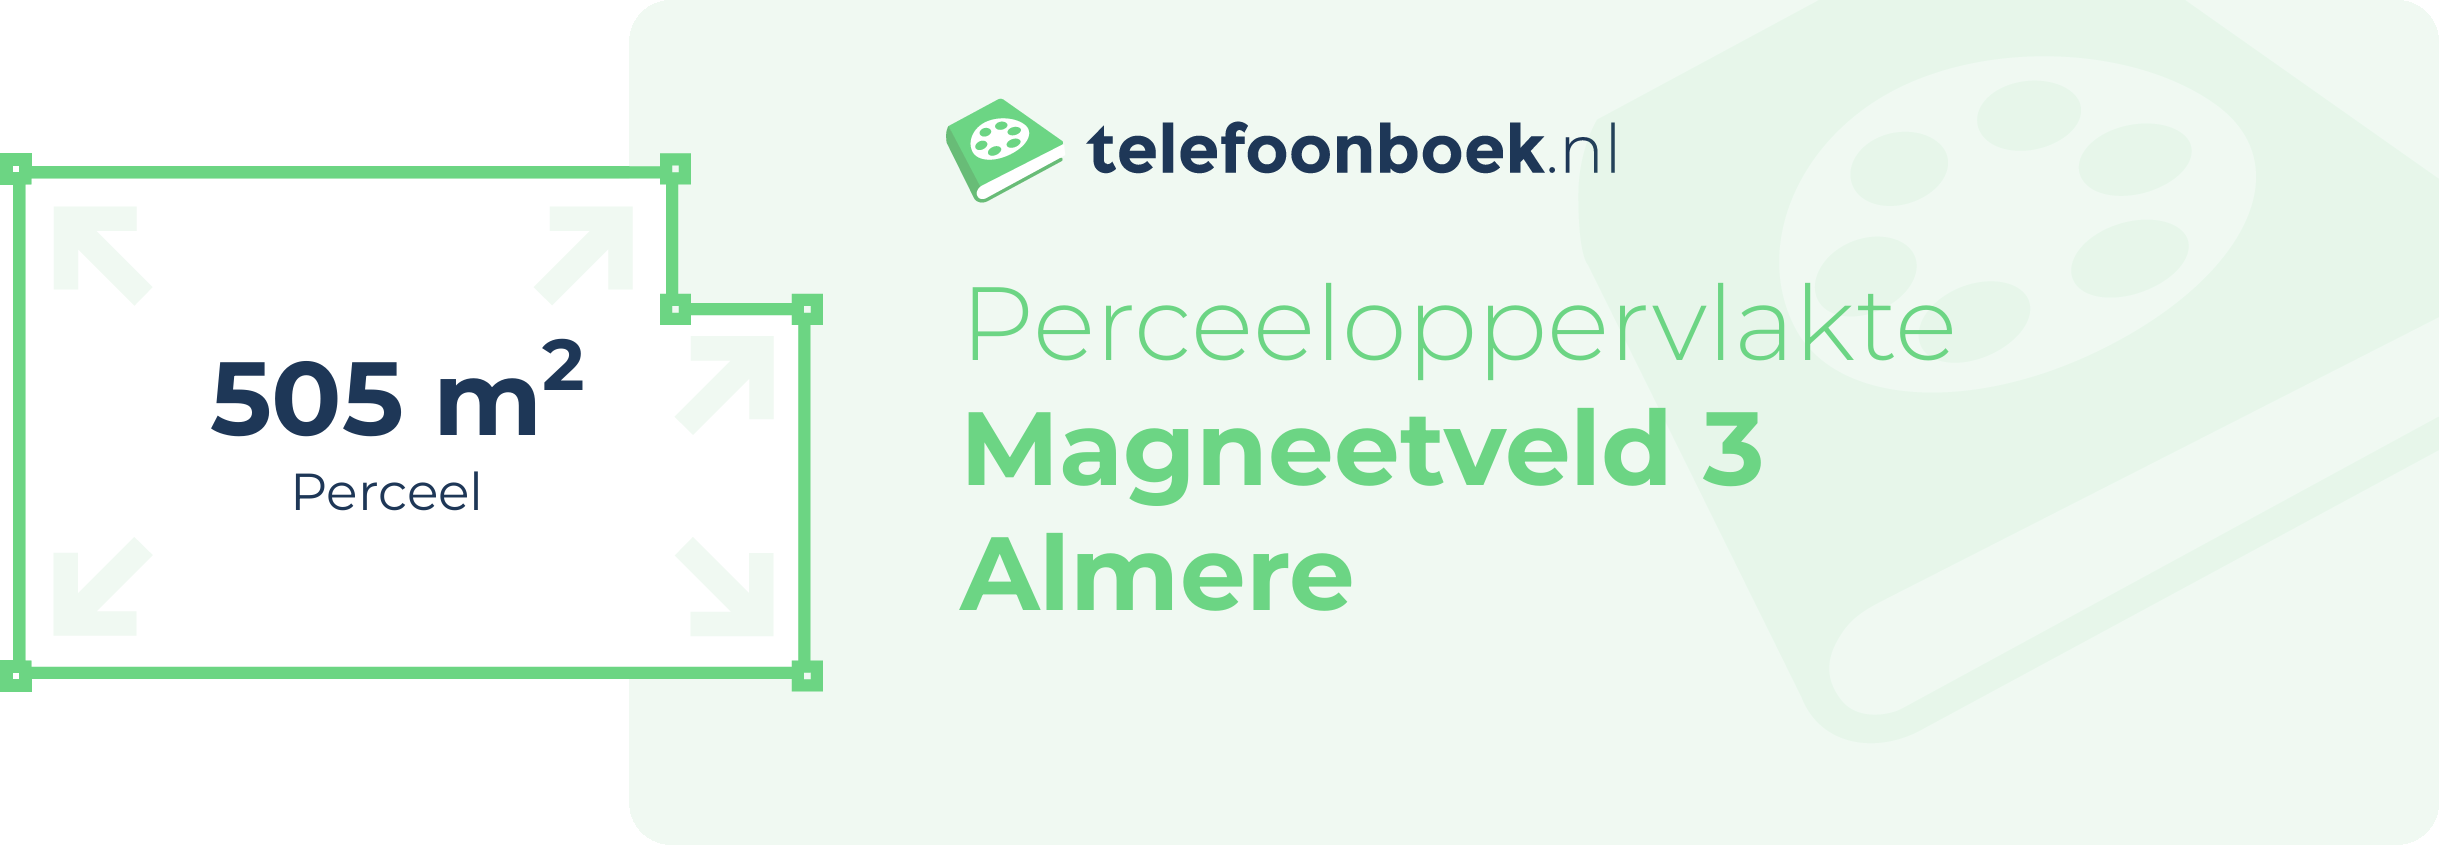 Perceeloppervlakte Magneetveld 3 Almere